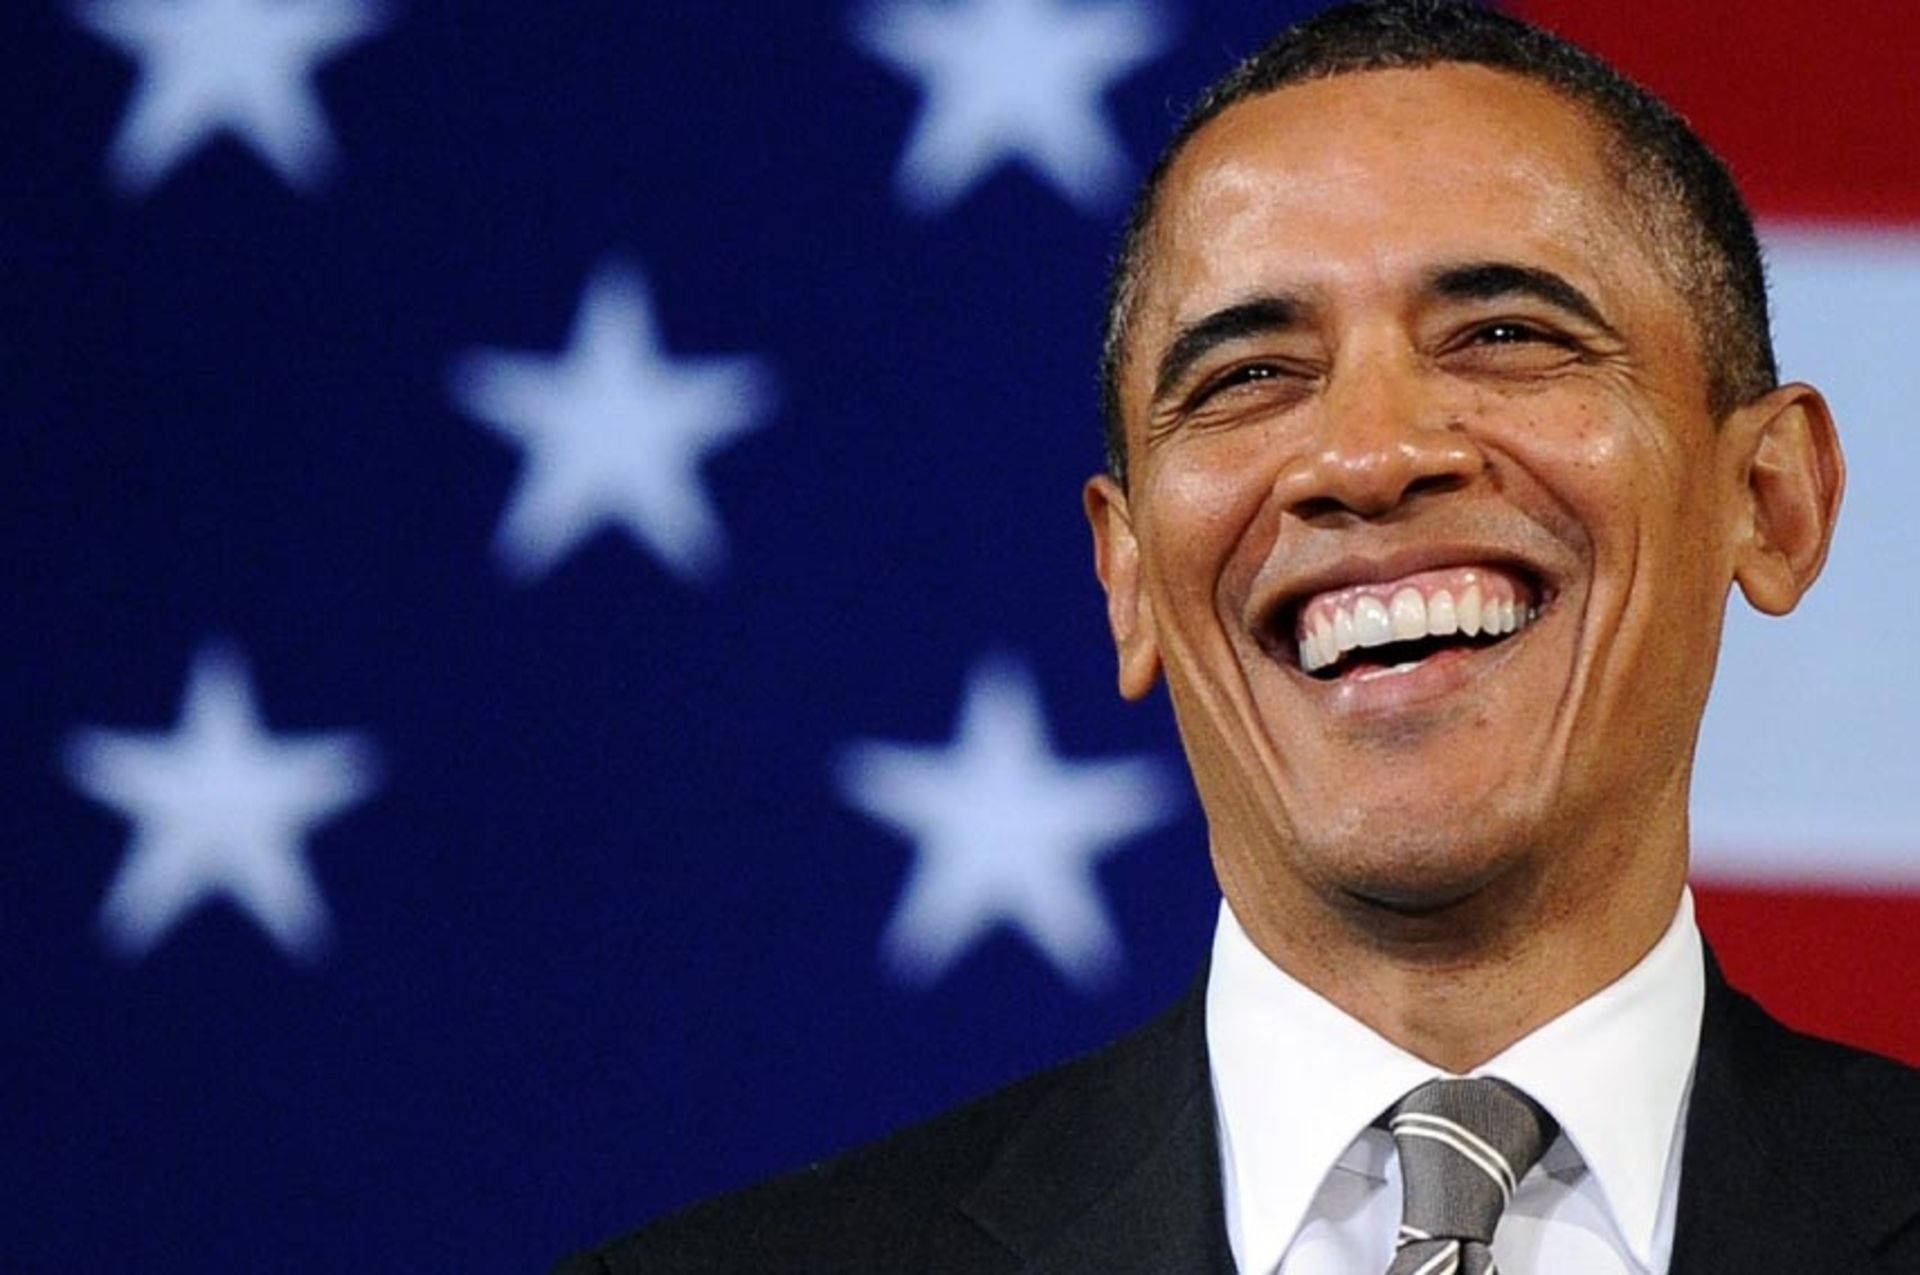 Barack Obama Smiling Candid Shot Background